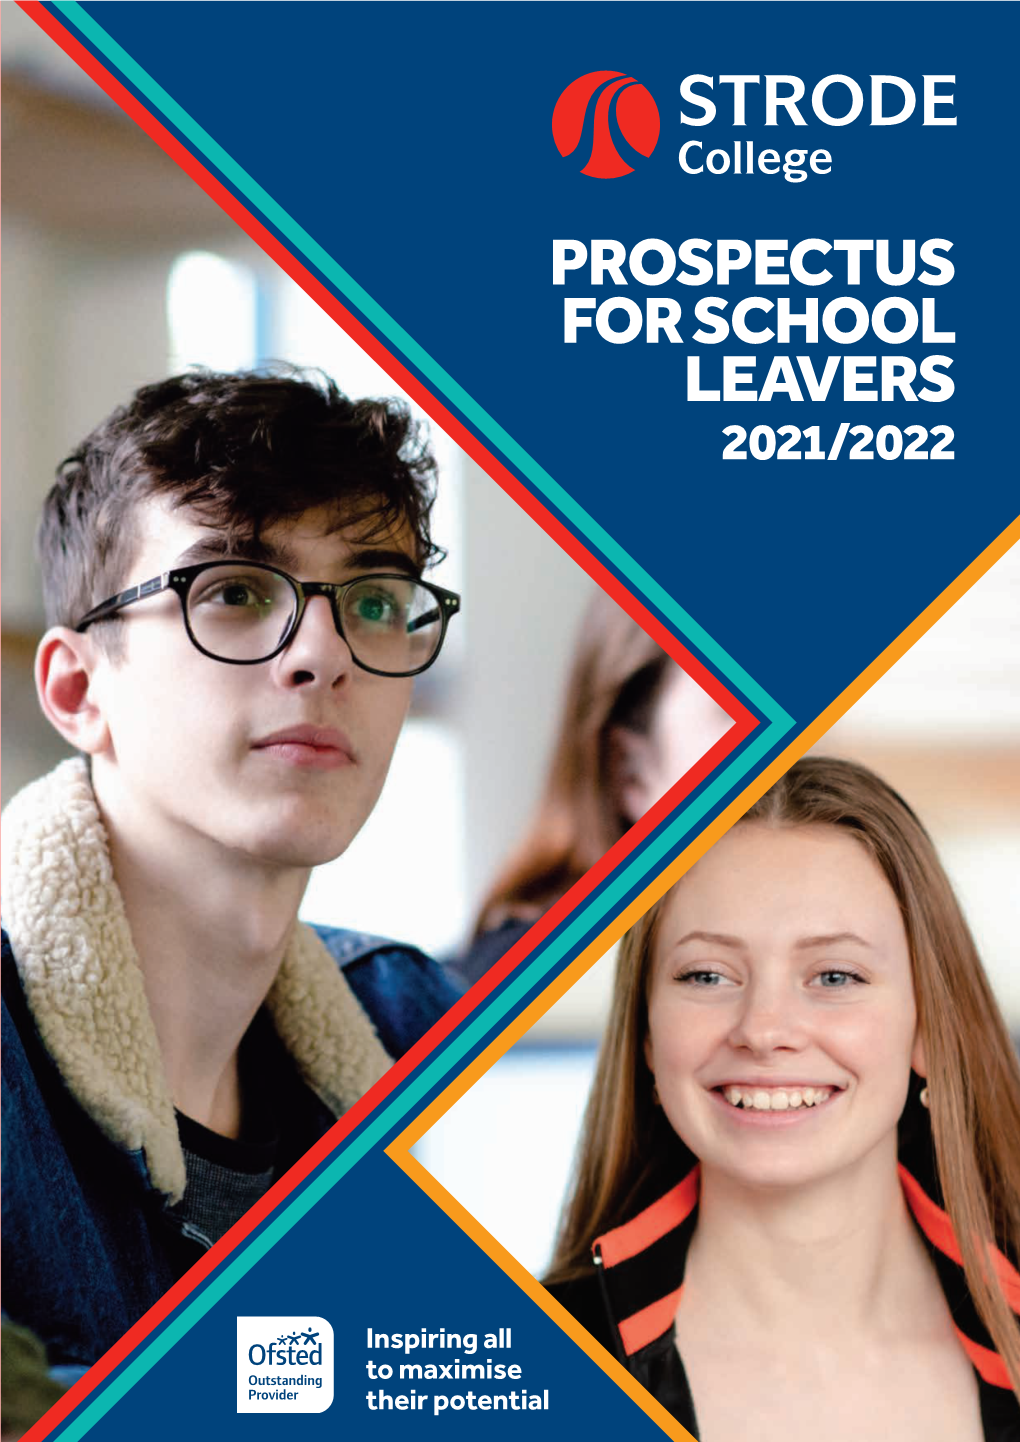 Prospectus for School Leavers 2021/2022